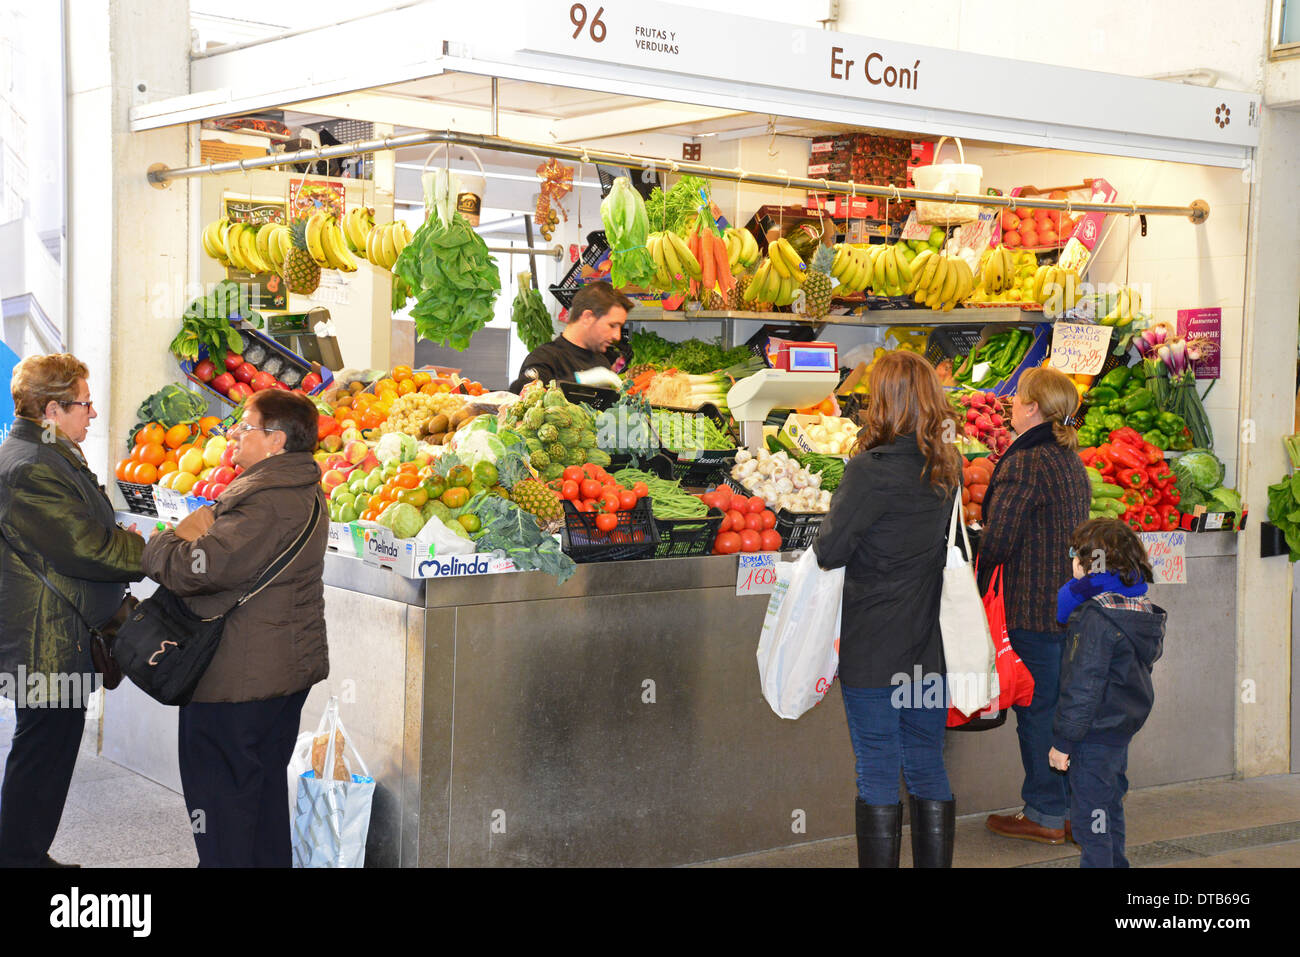 Fruit & vegetable stall in Central Indoor Market (Mercado Central), Plaza de las Flores, Cádiz, Cádiz Province, Andalusia, Spain Stock Photo